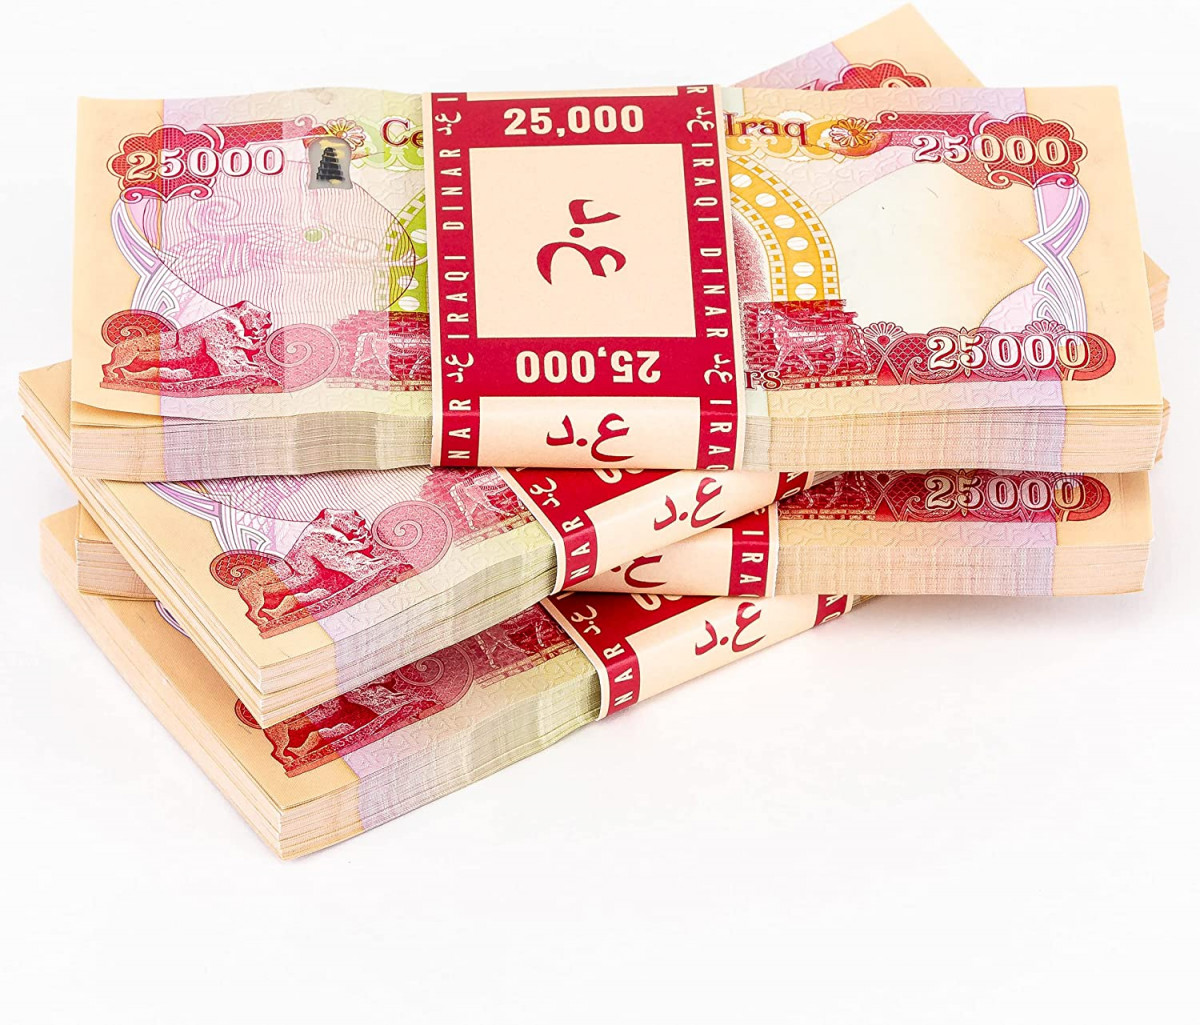 Iraqi dinar forex site negative risk premium before investing